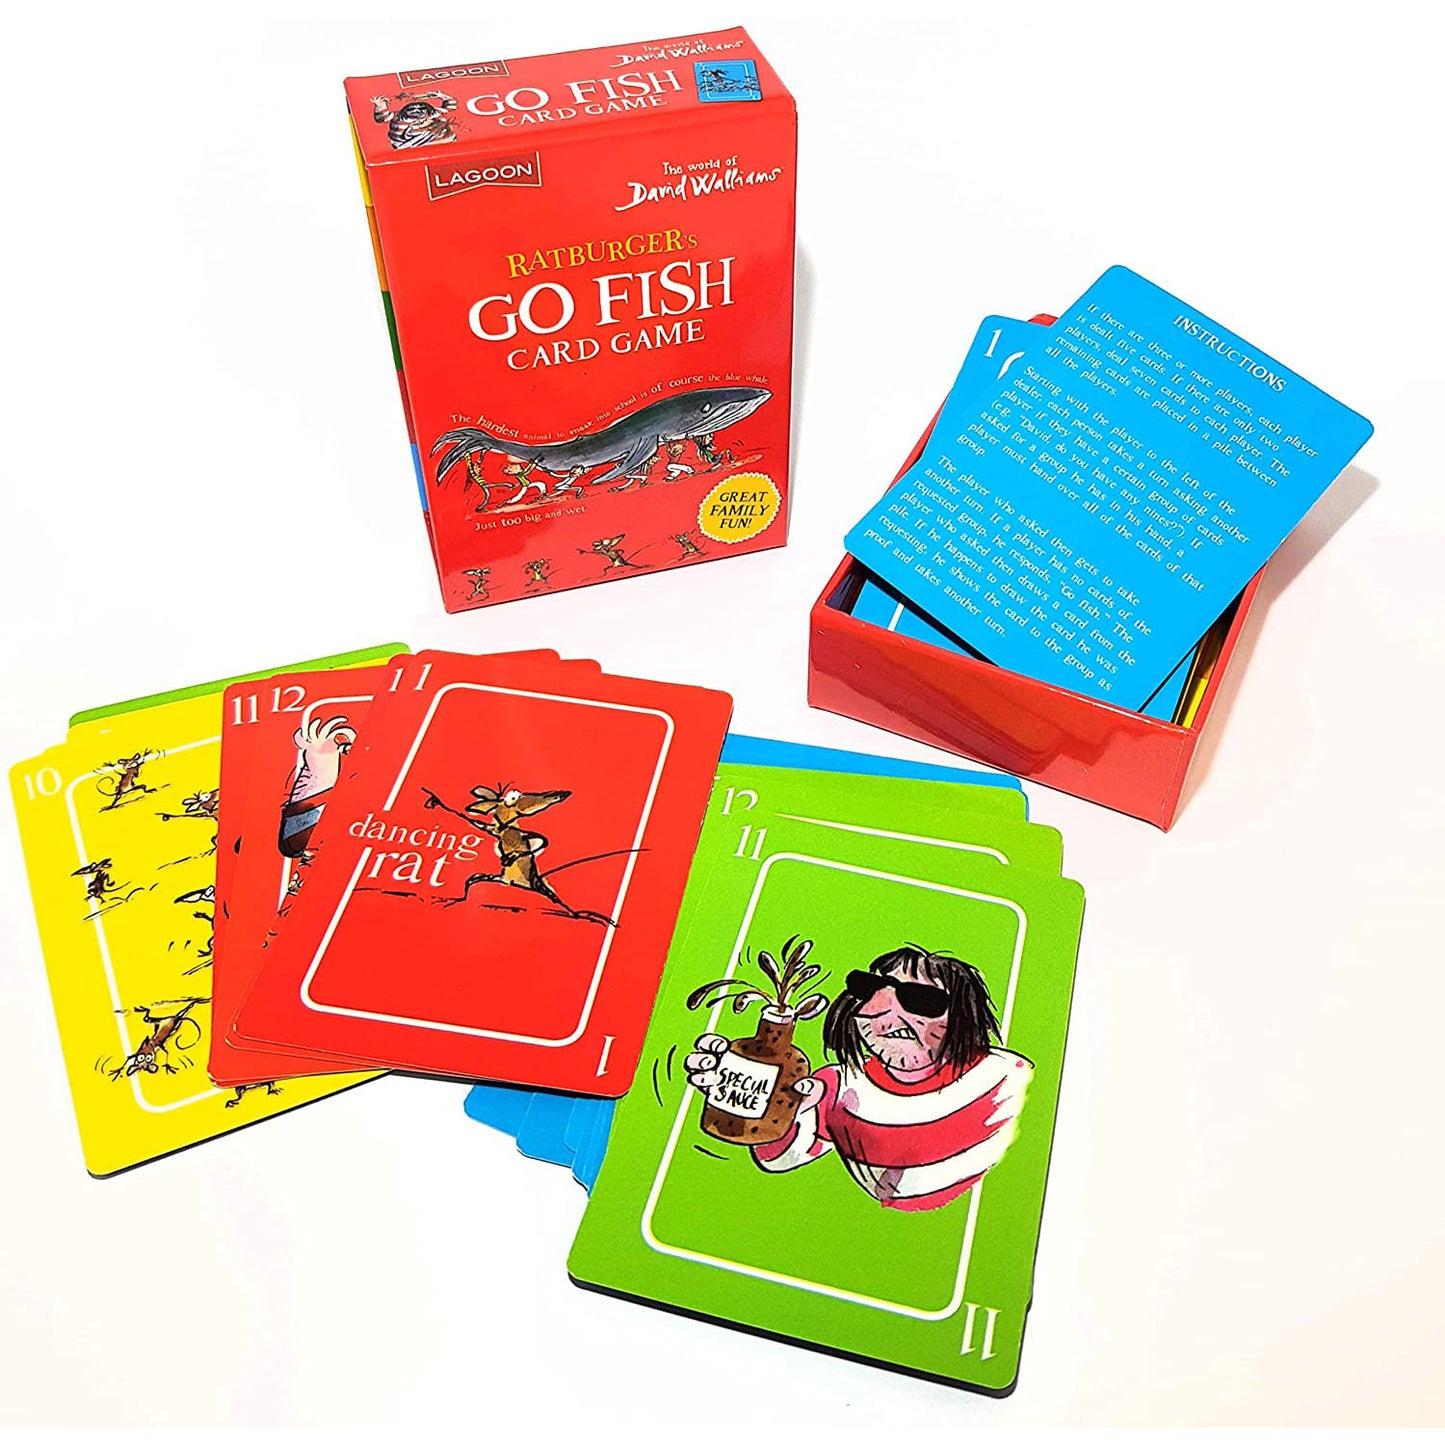 Ratburgers Go Fish Card Game - World of David Walliams Childrens Games